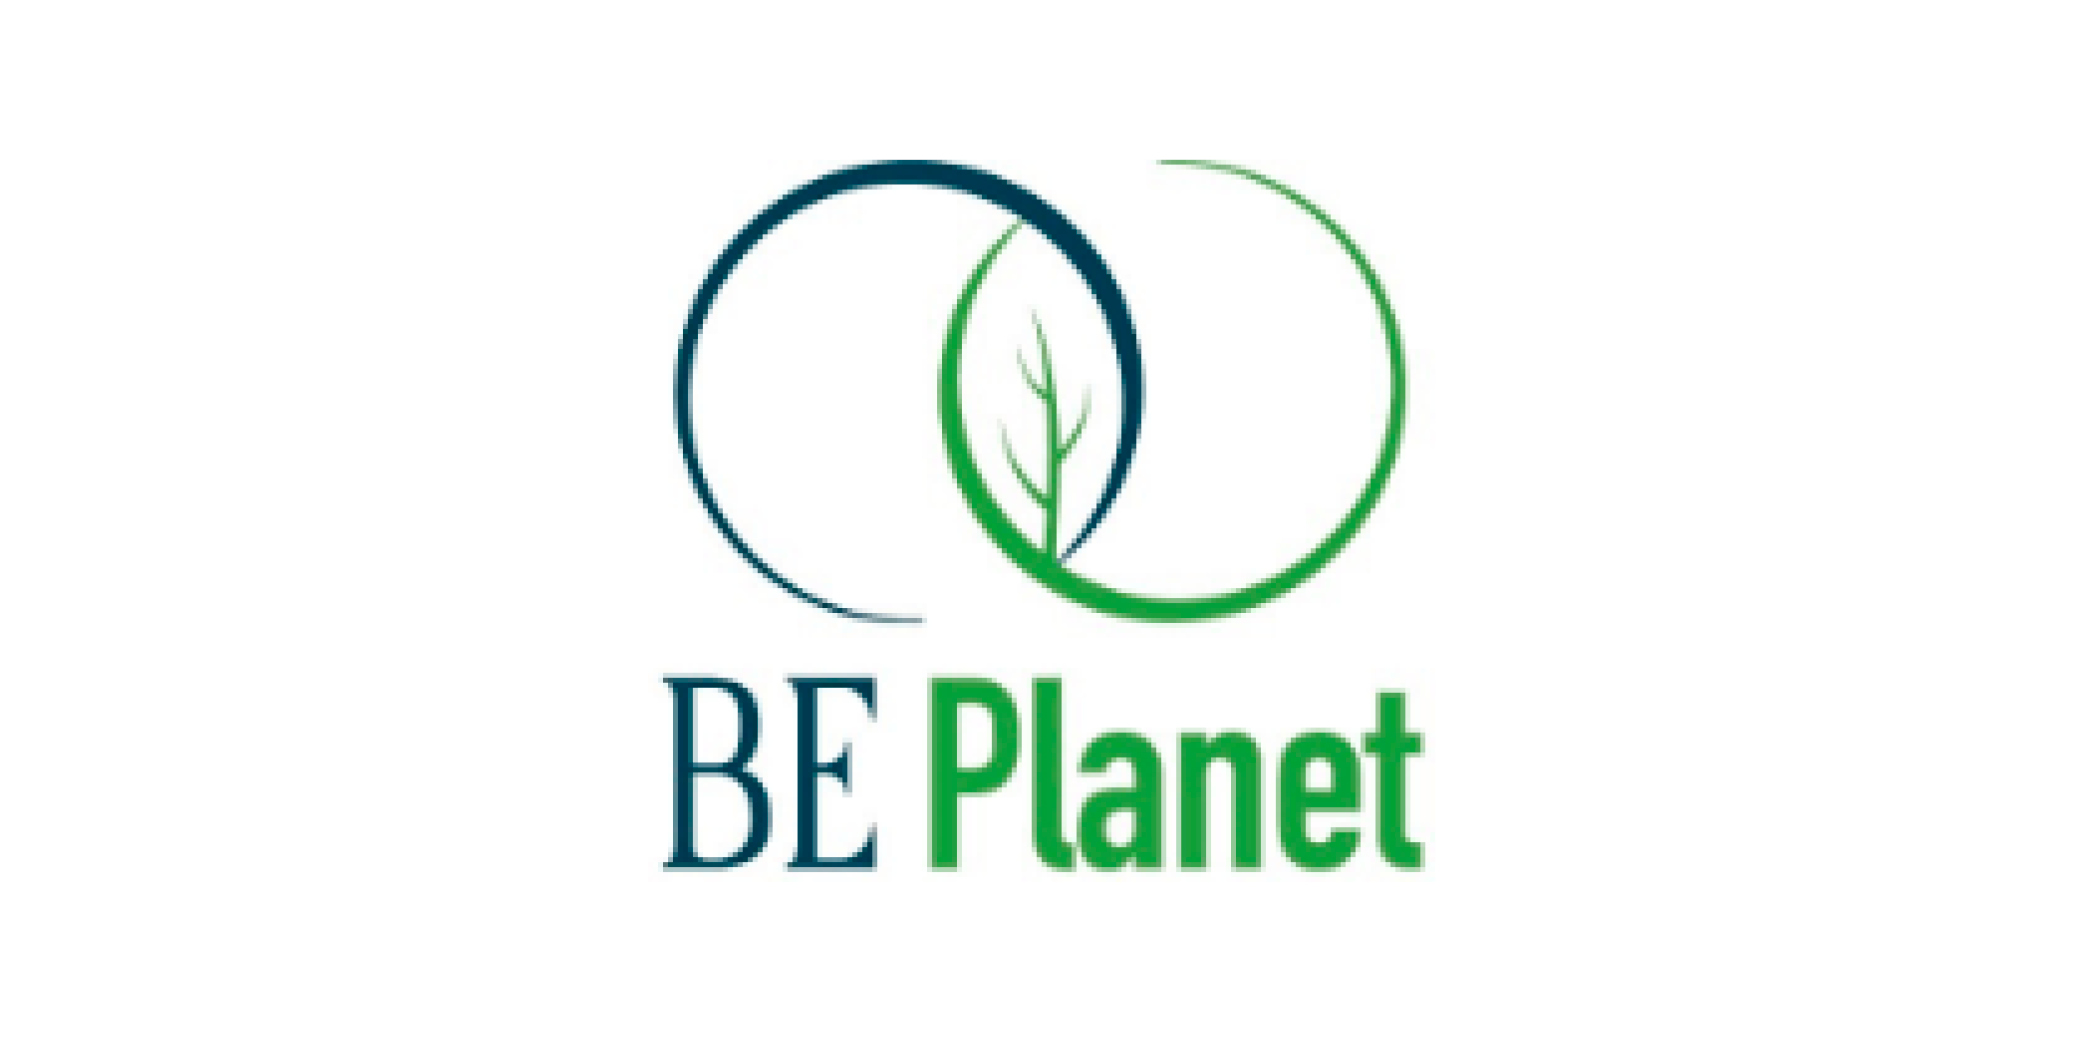 Beretta BEPlanet Logo Canada Feature